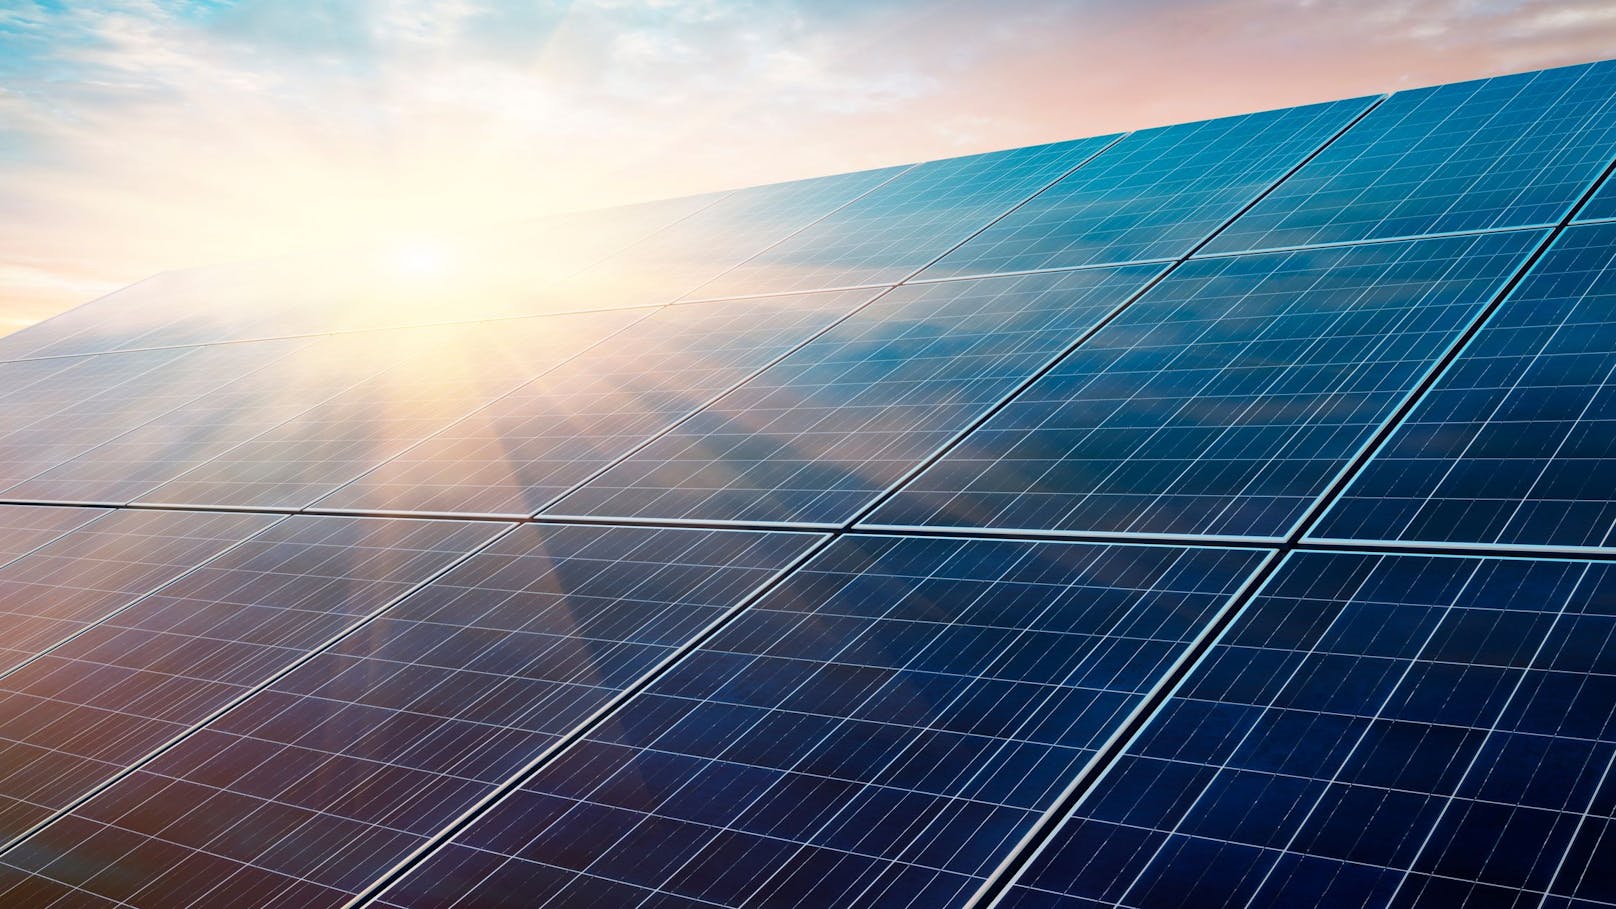 Österreichs Technologieplattform Photovoltaik befürwortet den beschlossenen "Made-in-EU-Bonus".